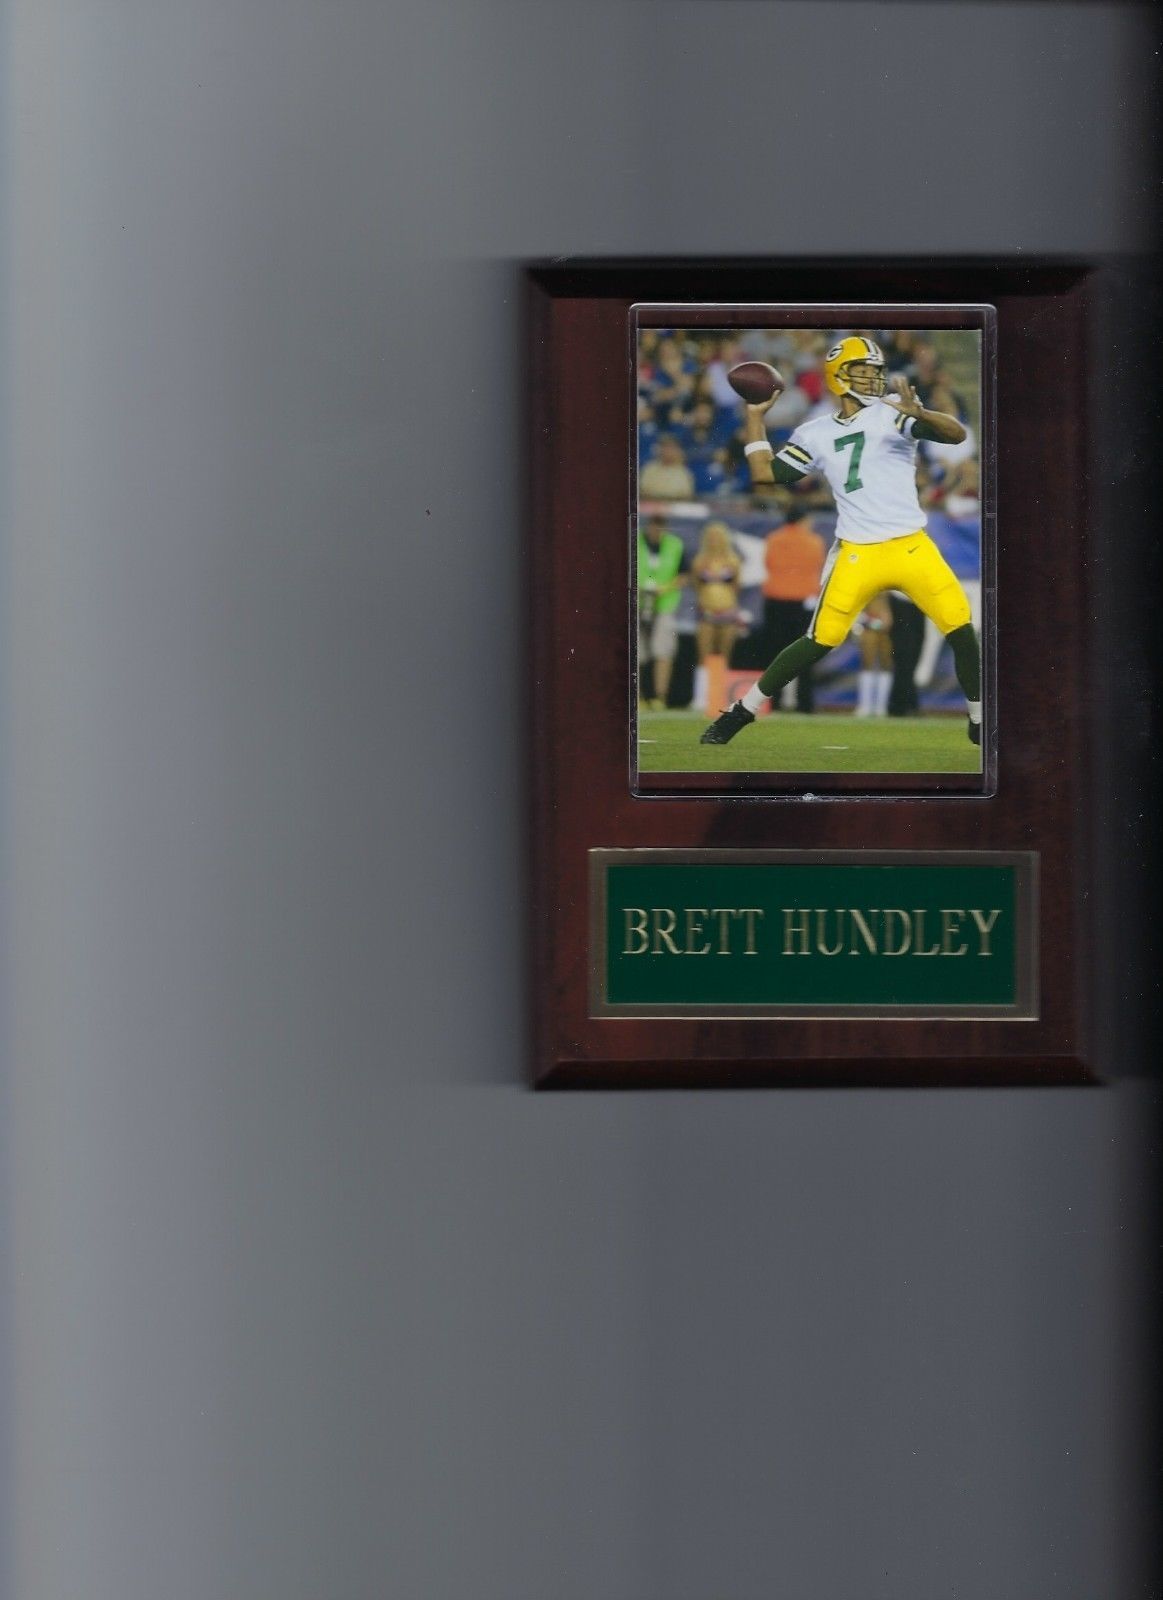 BRETT HUNDLEY PLAQUE GREEN BAY PACKERS FOOTBALL NFL - $2.37